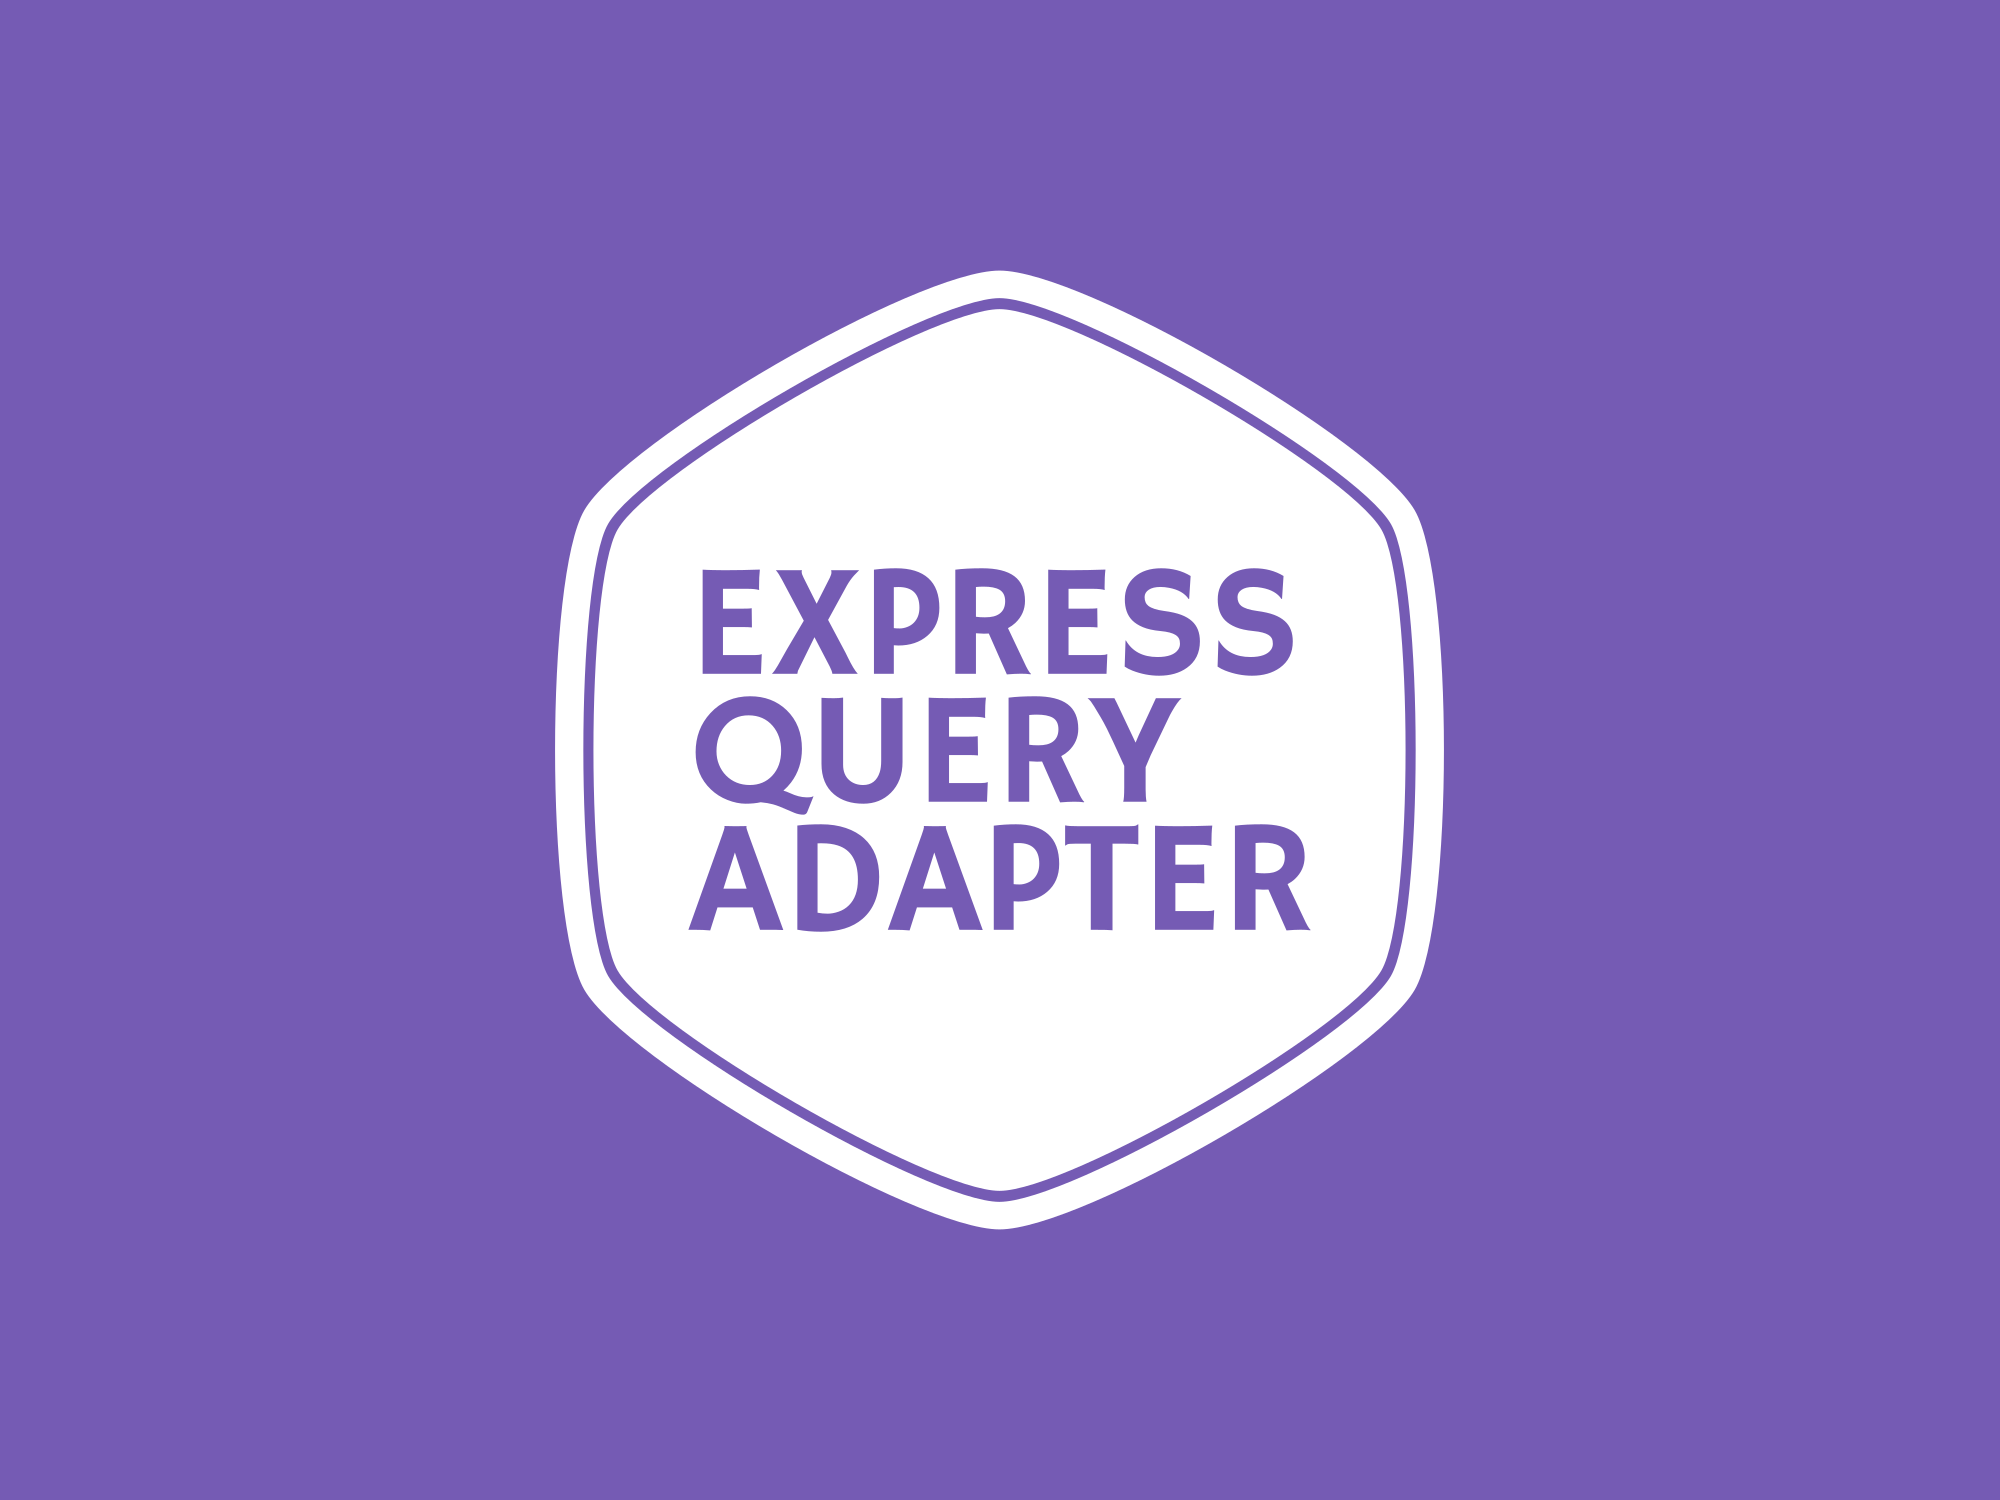 Express Query Adapter logo